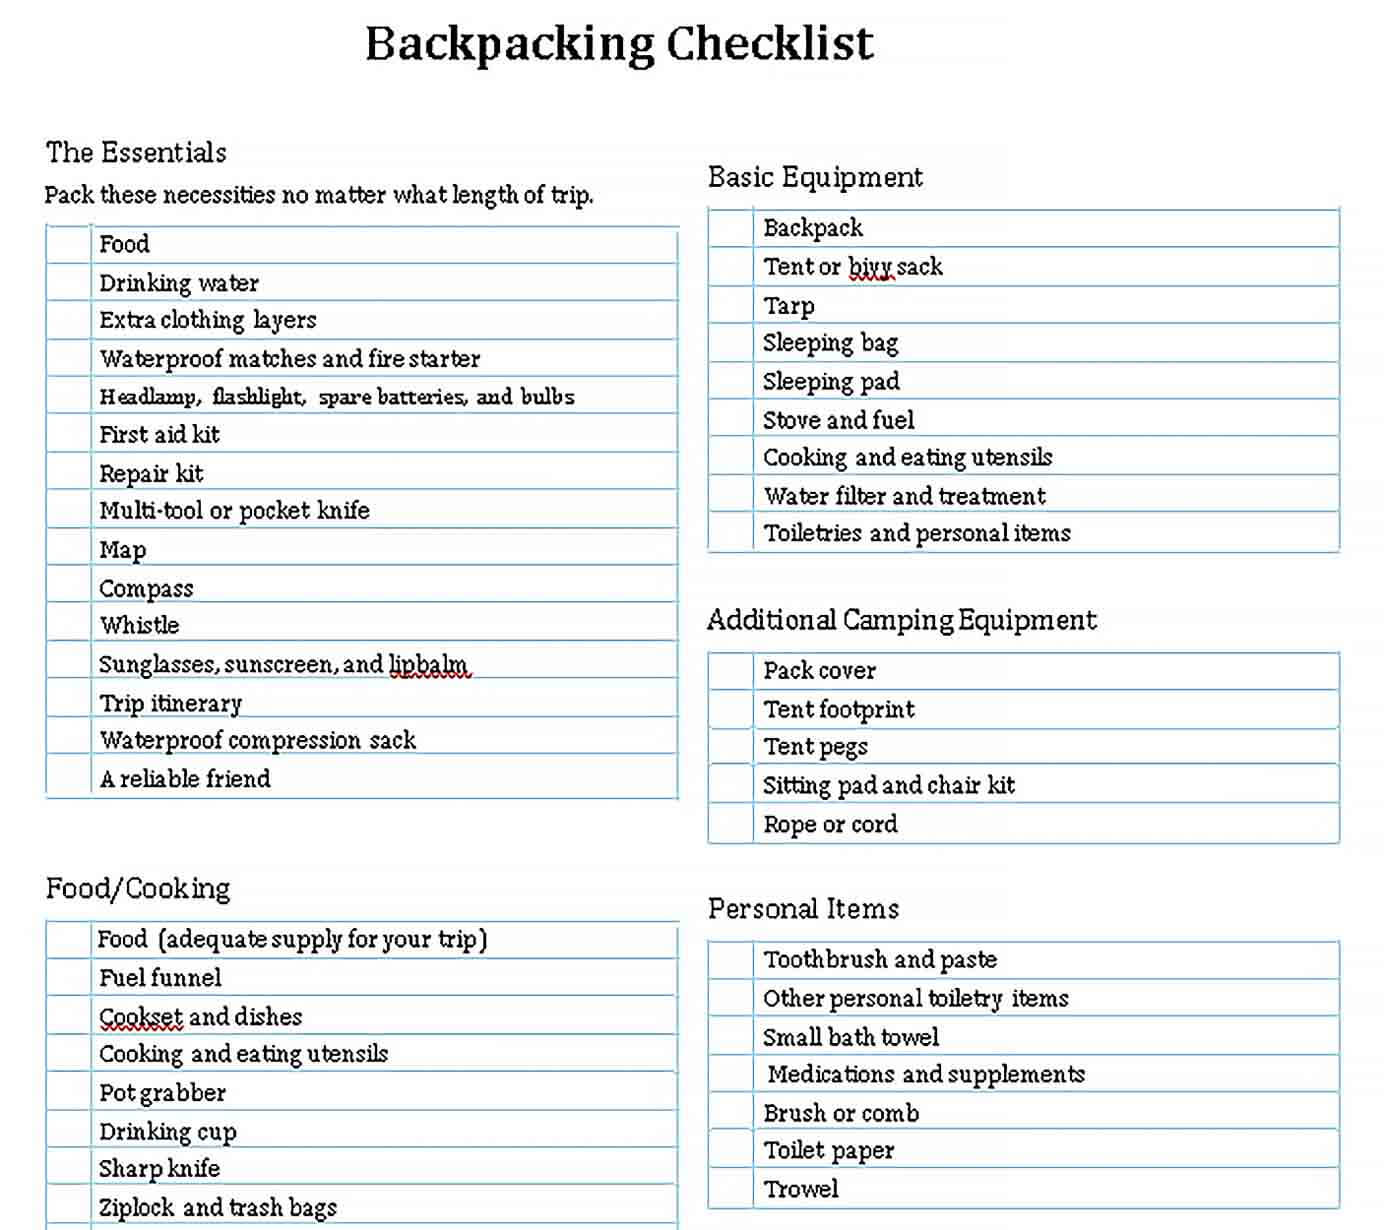 Sample Backpacking Essentials Checklist